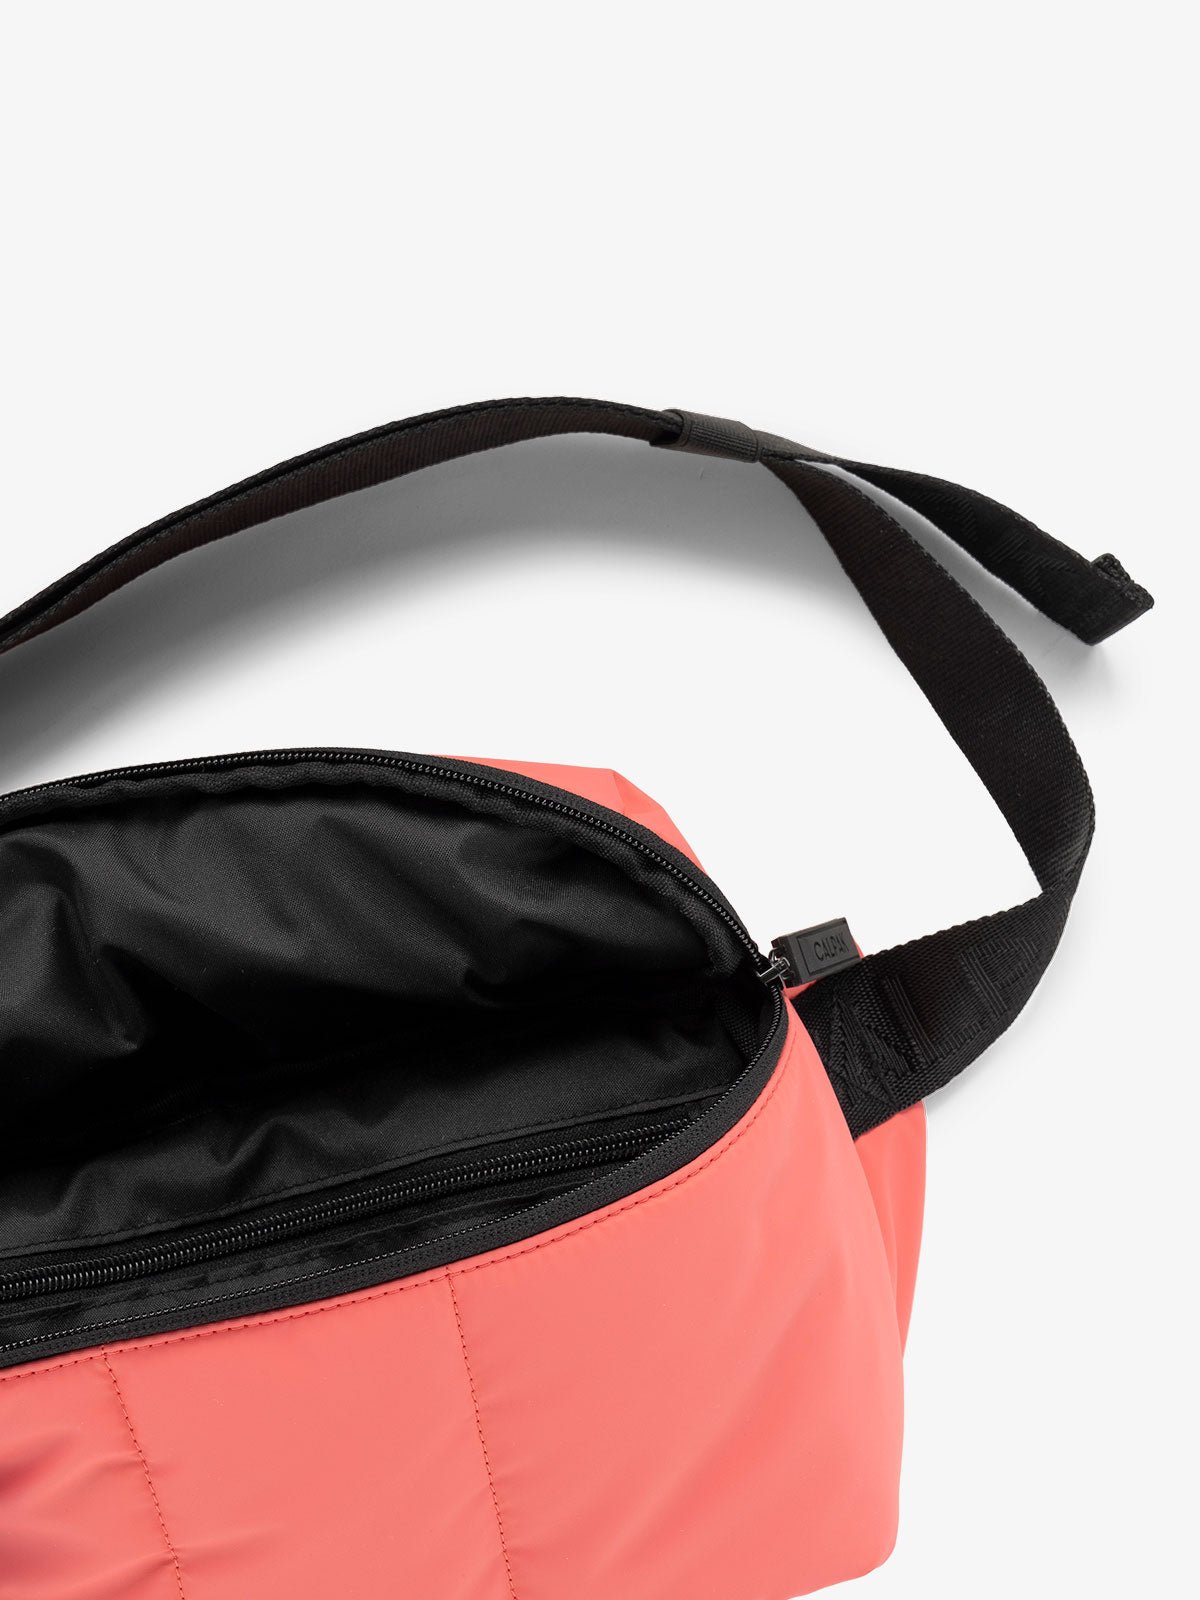 CALPAK Luka Belt Bag close up interior and strap in pink